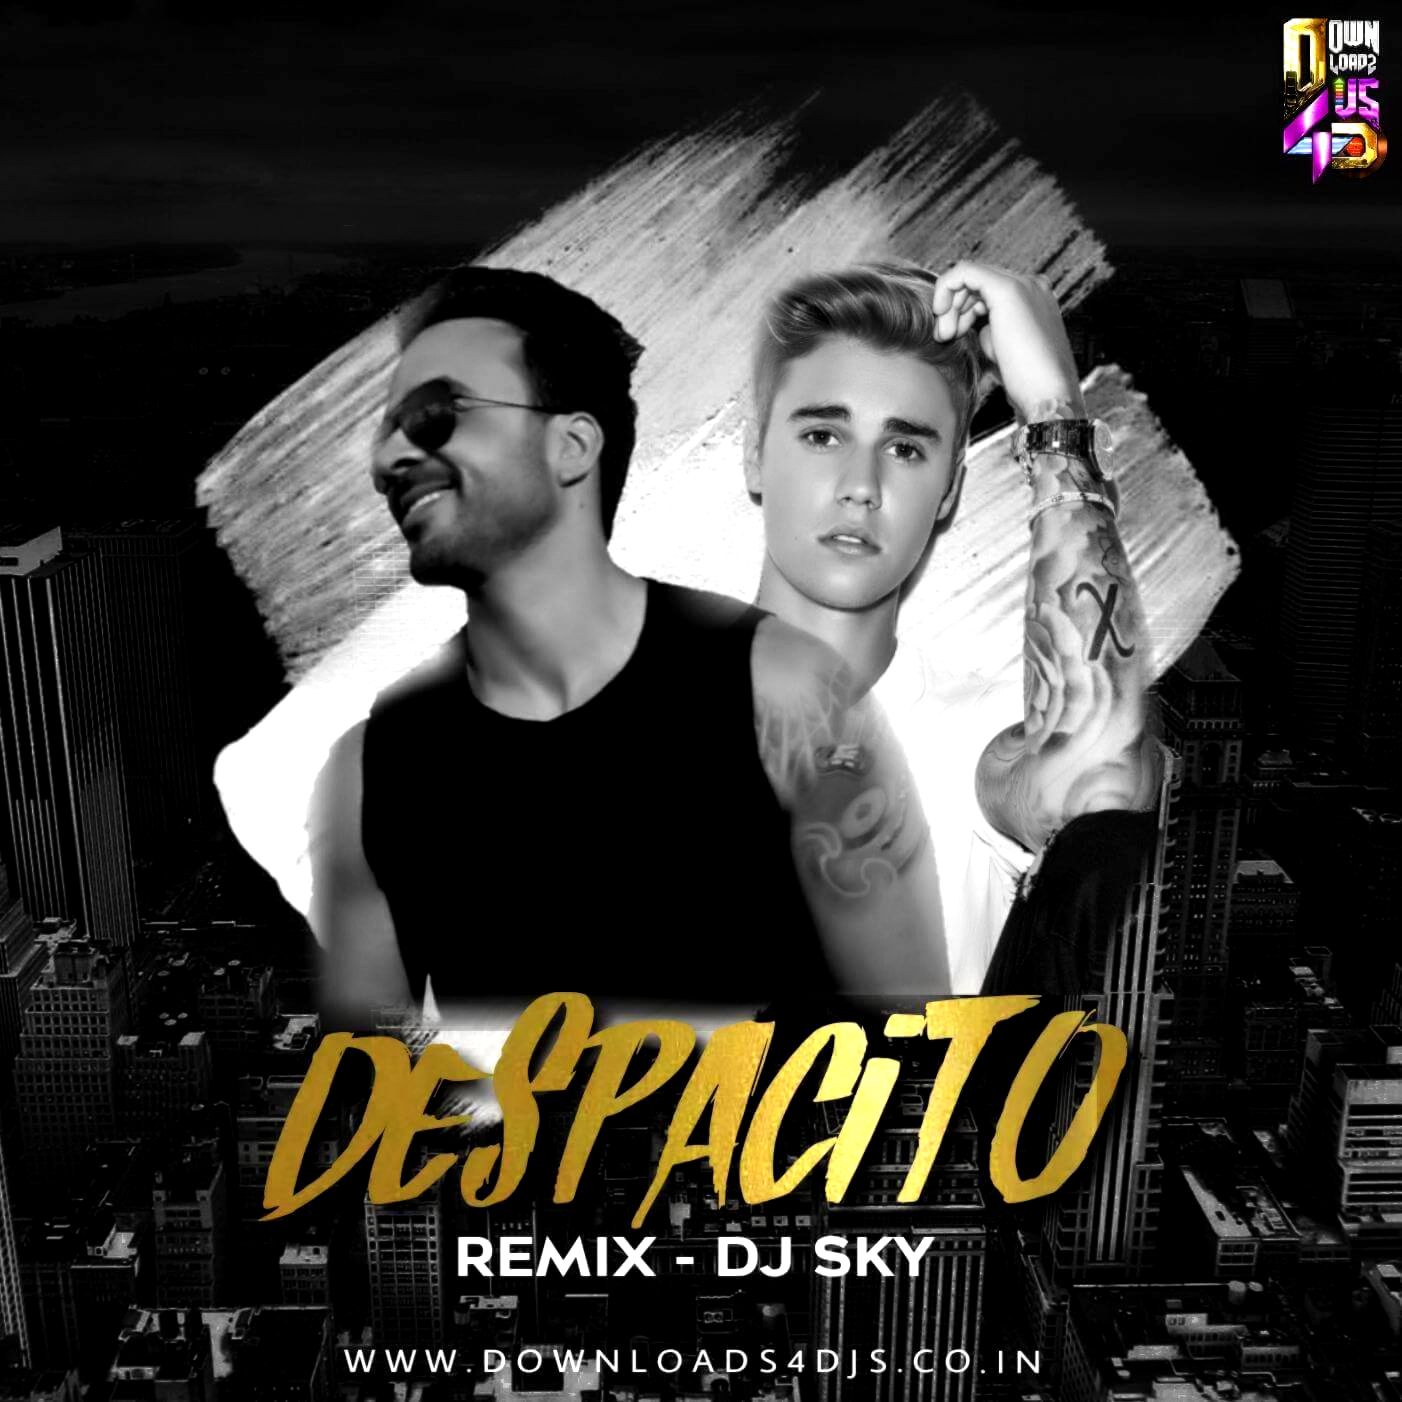 despacito remix mp3 download 320kbps free download